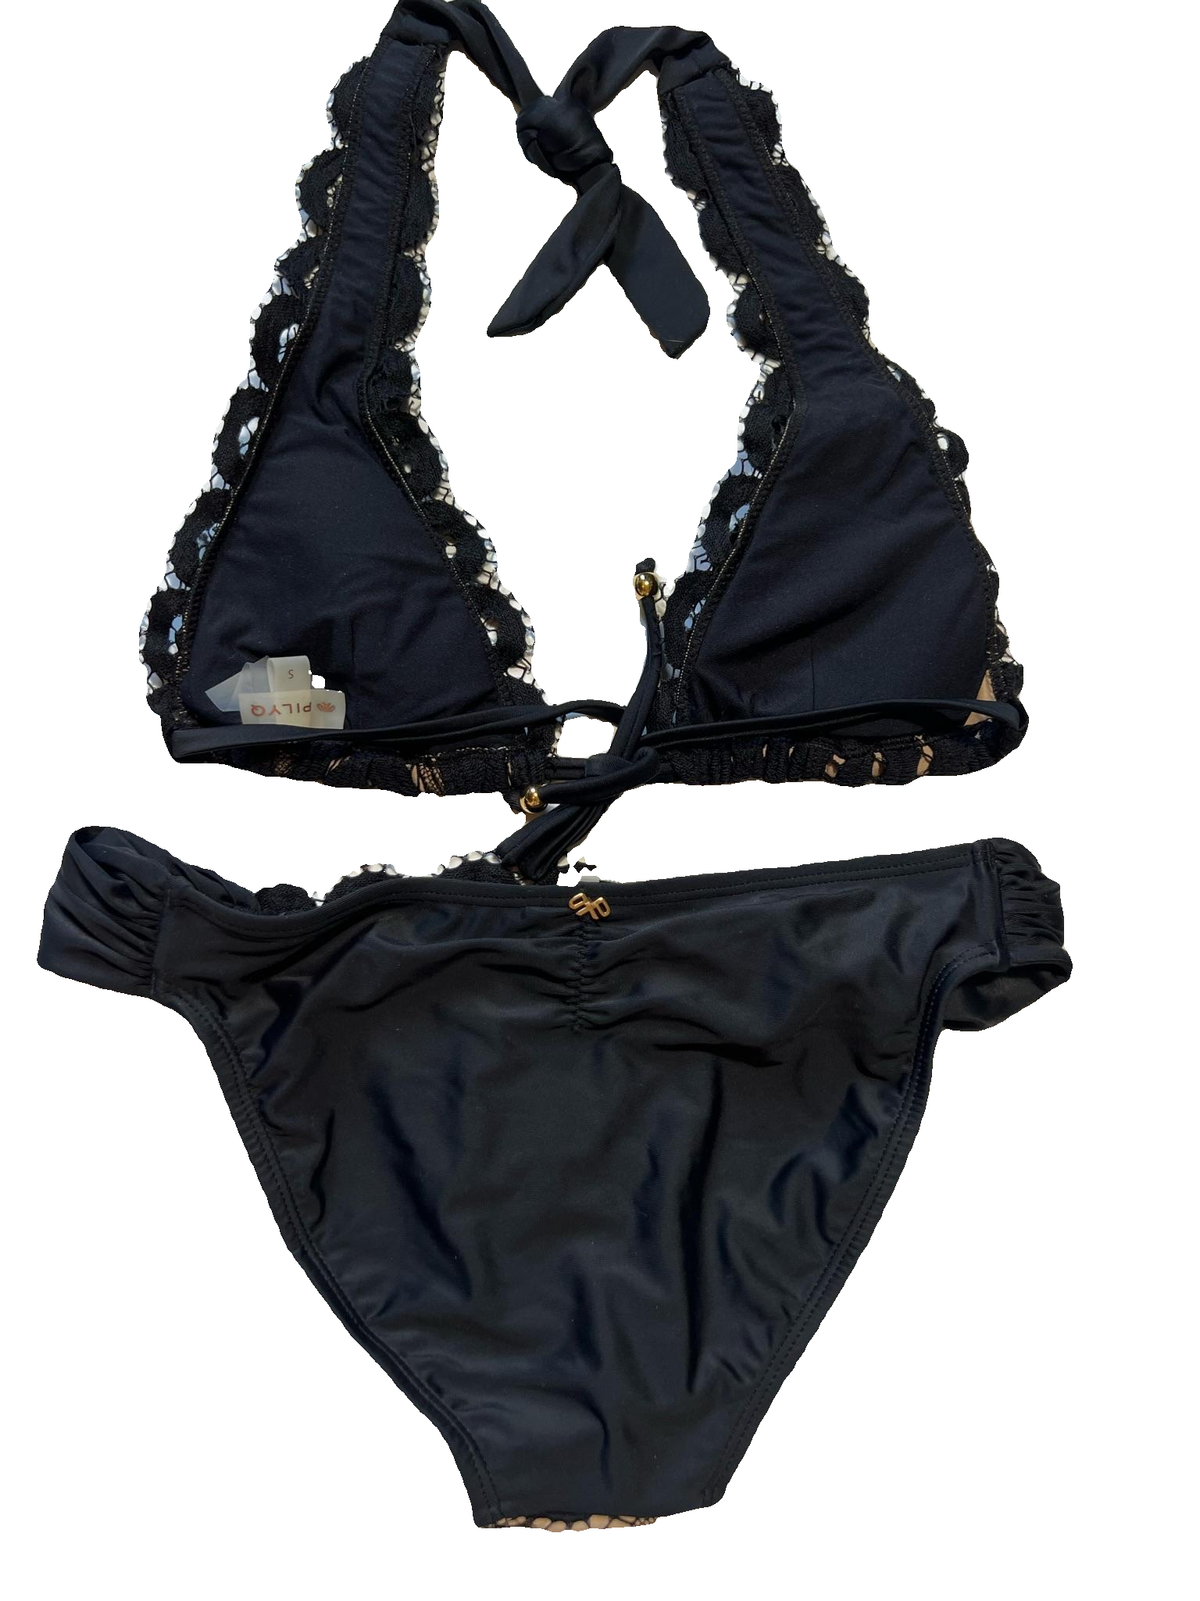 PILYQ - Black Lace Halter Bikini Set - NEW WITH TAGS